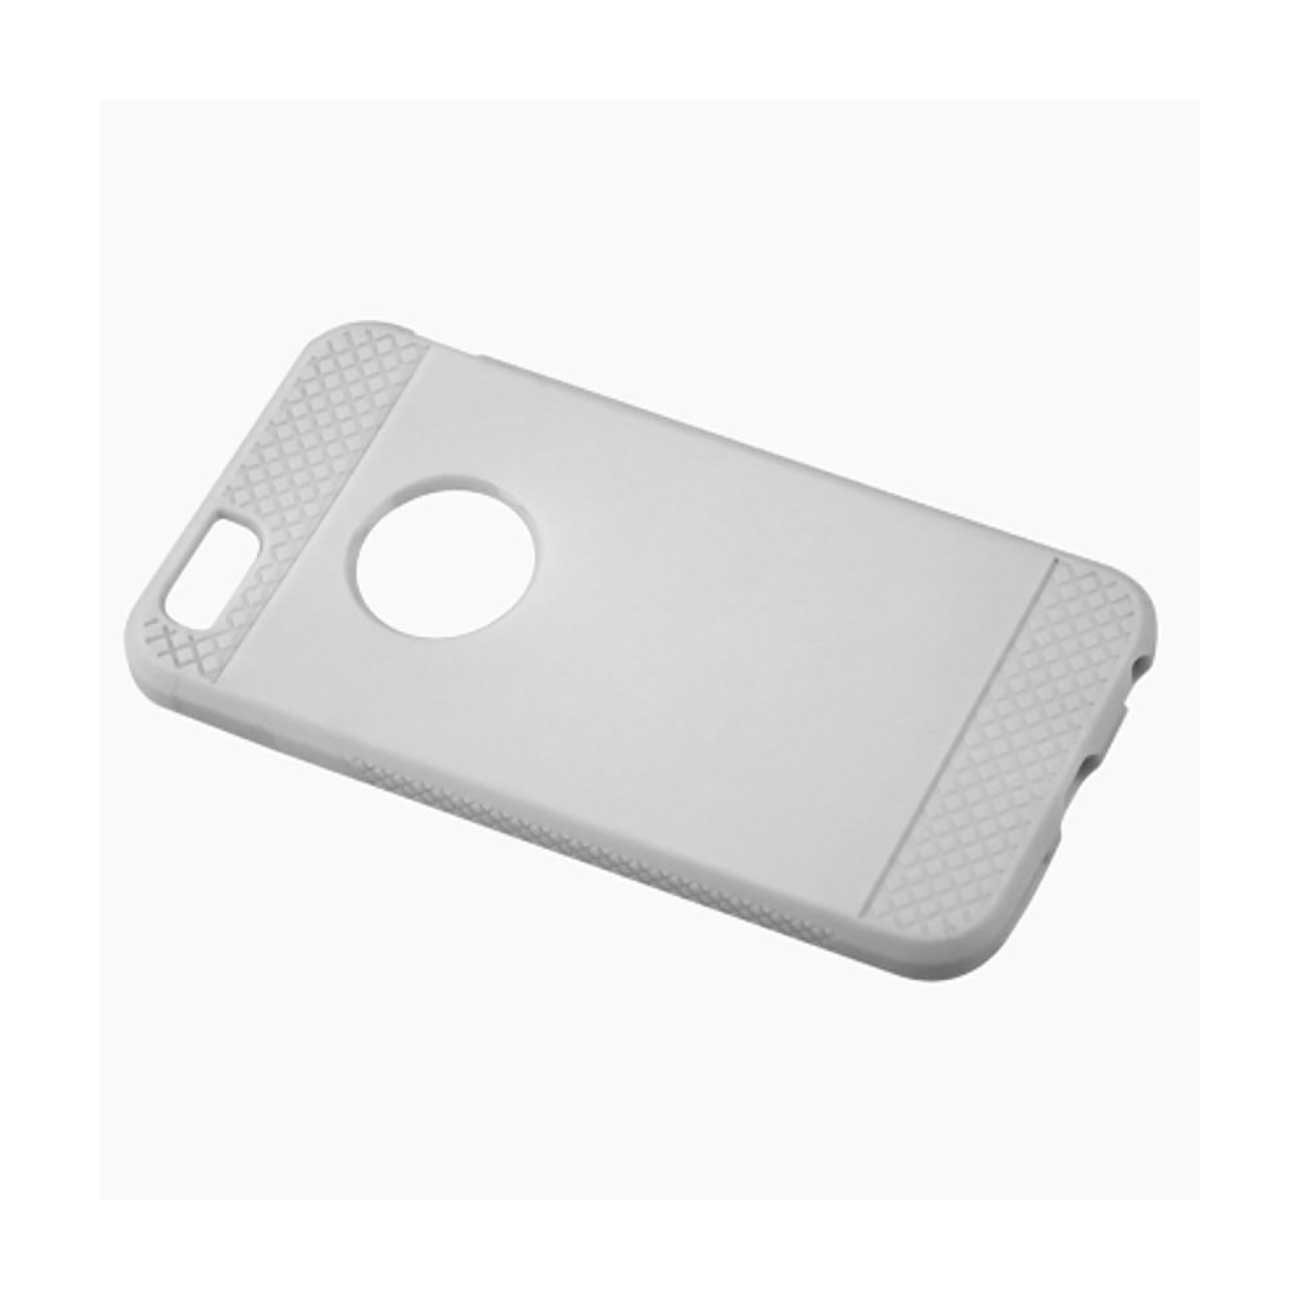 Case Gel TPU Ridges iPhone 6S/ 6 White Color